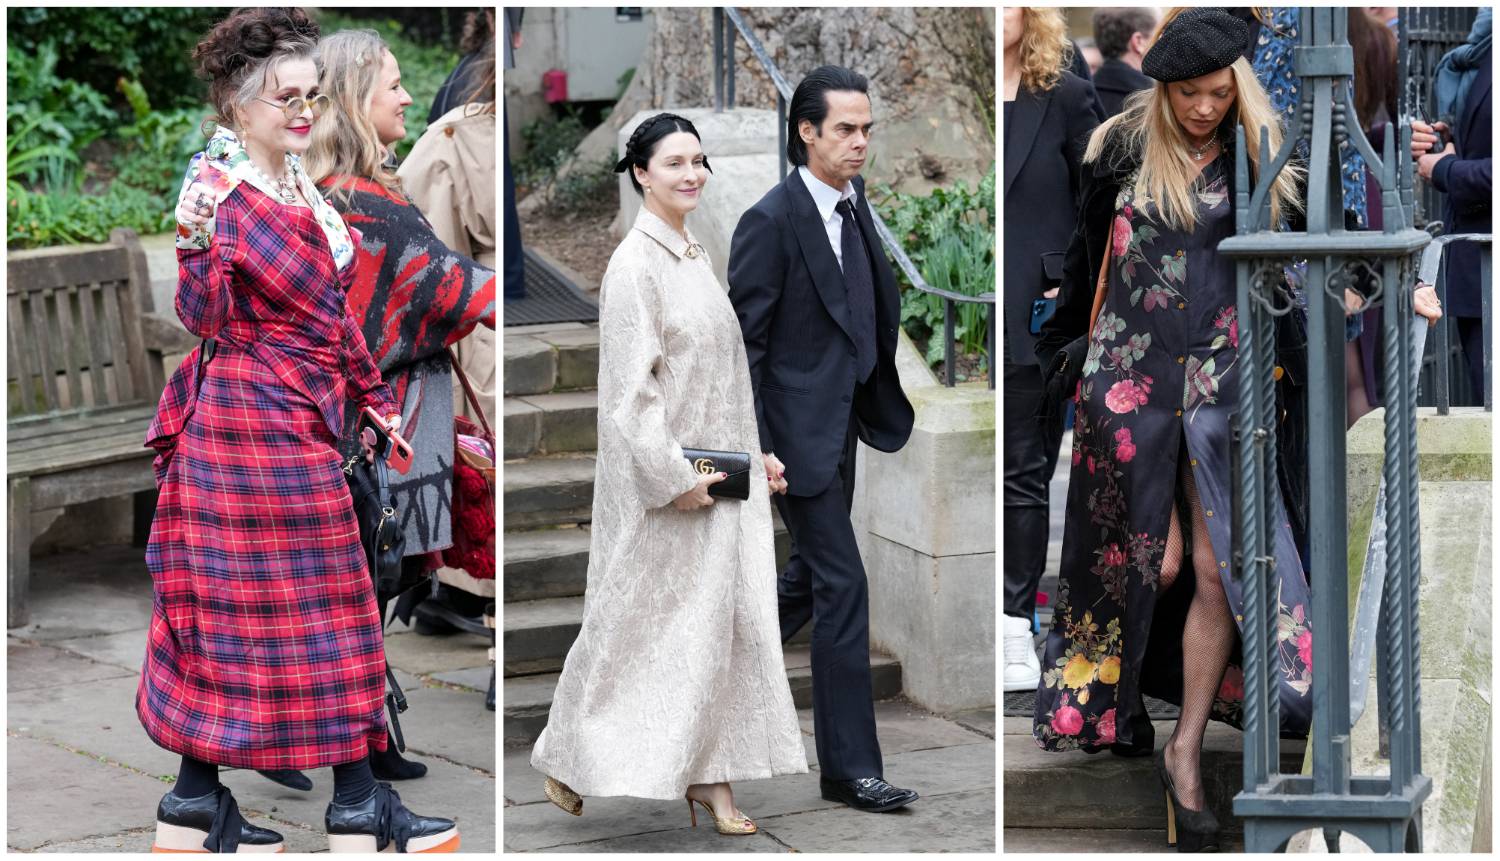 Kate Moss, Nick Cave, Victoria Beckham i Anna Wintour odali su počast Vivienne Westwood